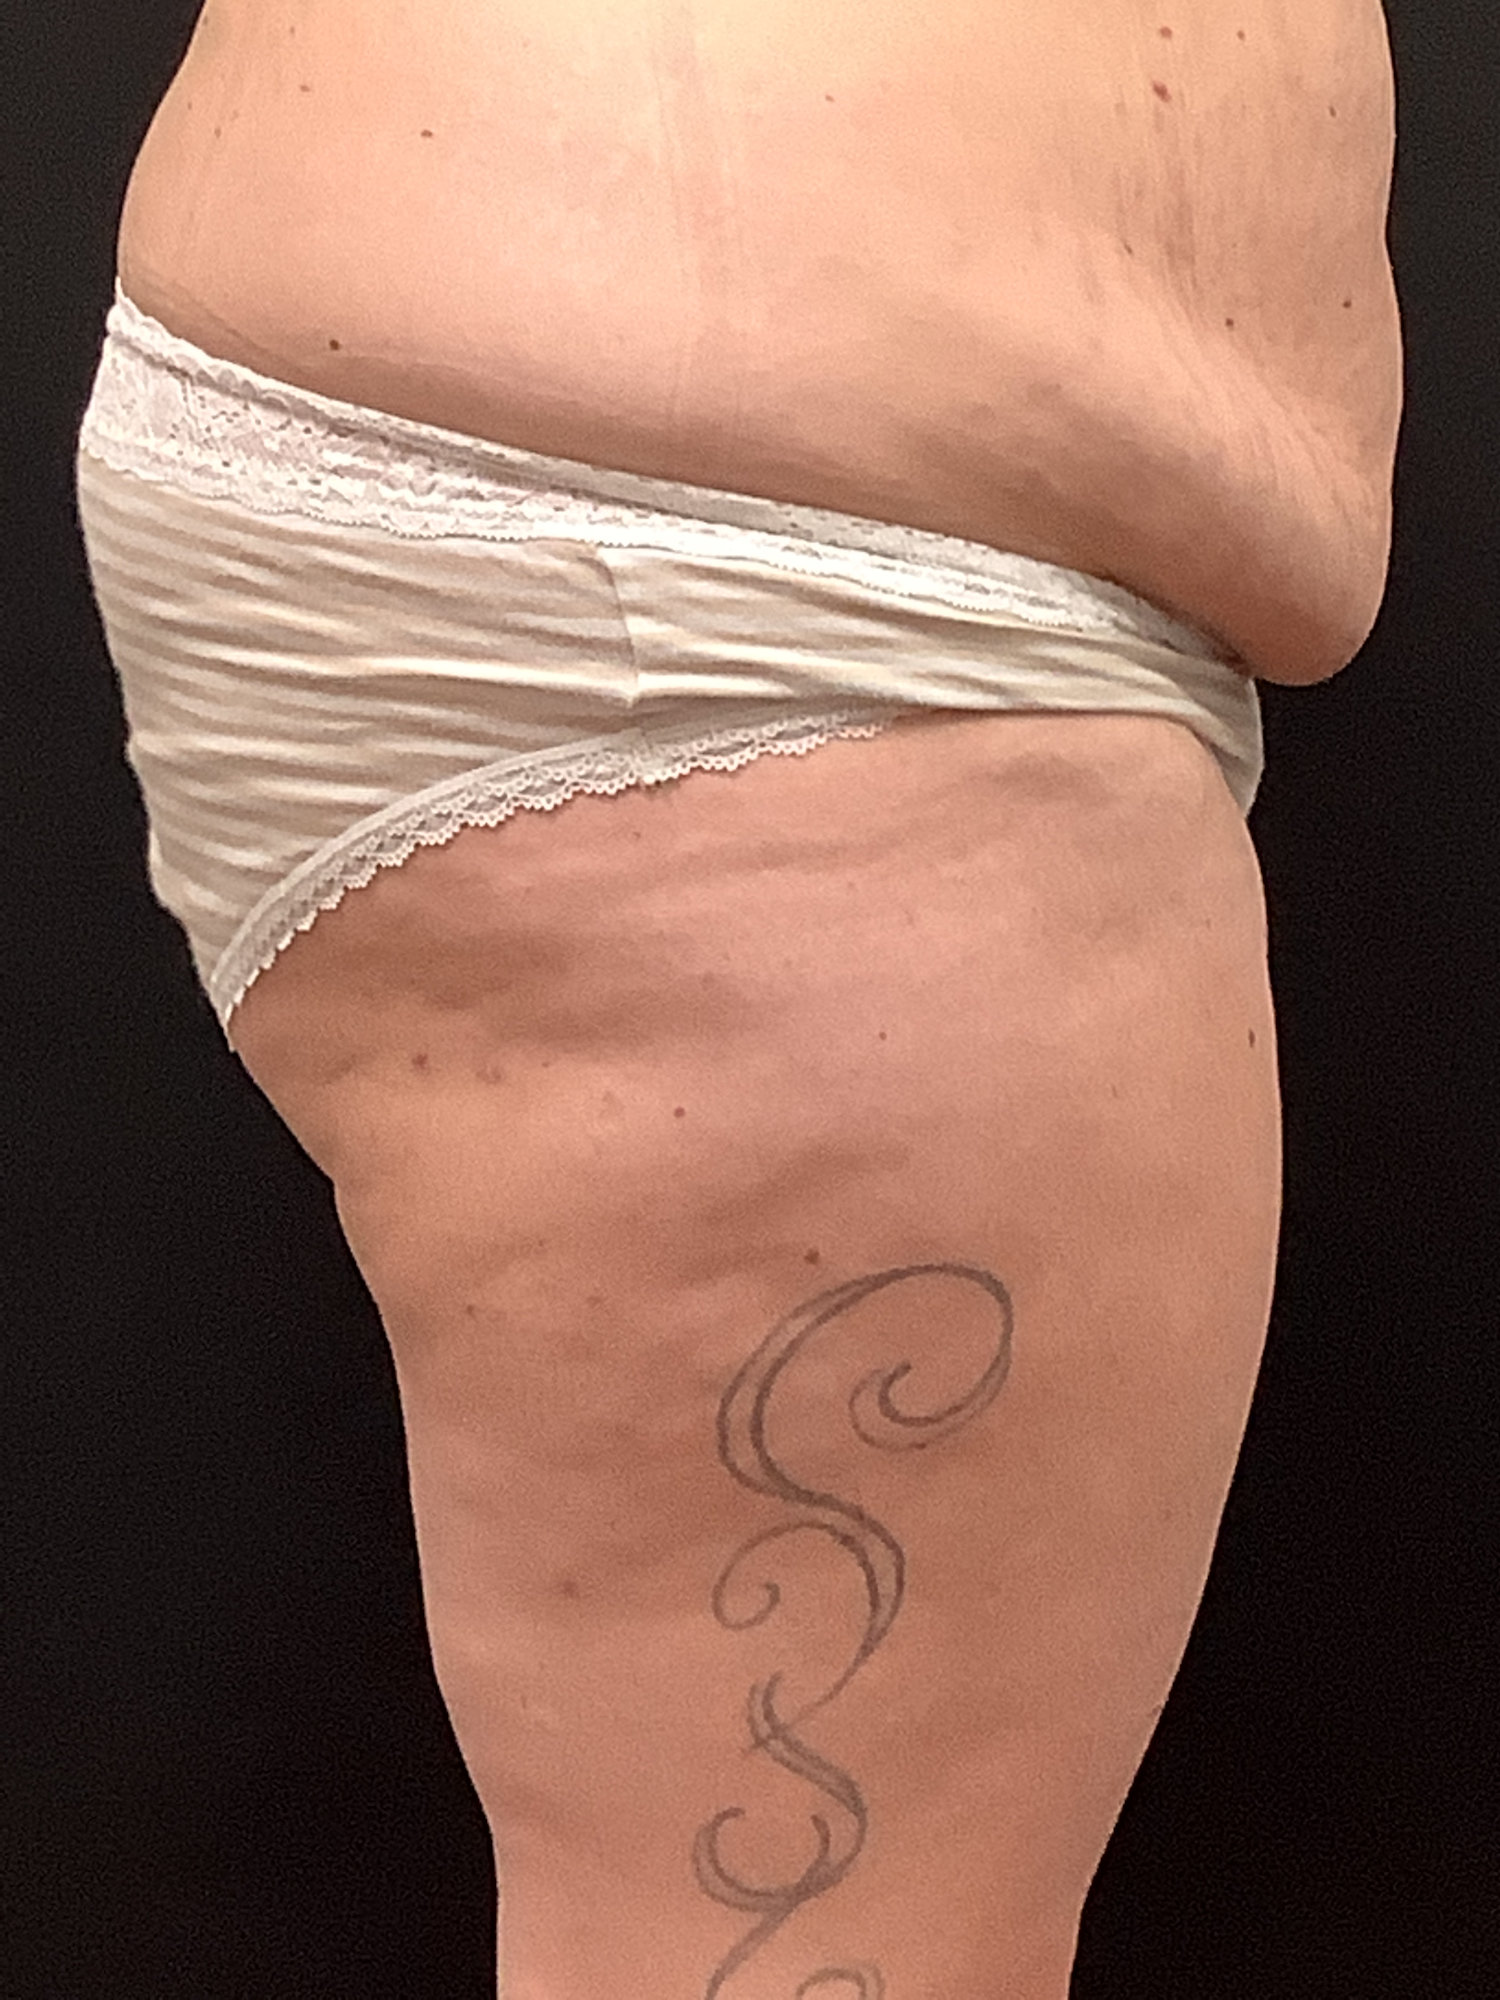 Mastopexy, Abdominoplasty with Liposuction, and Brazilian Butt Augmentation